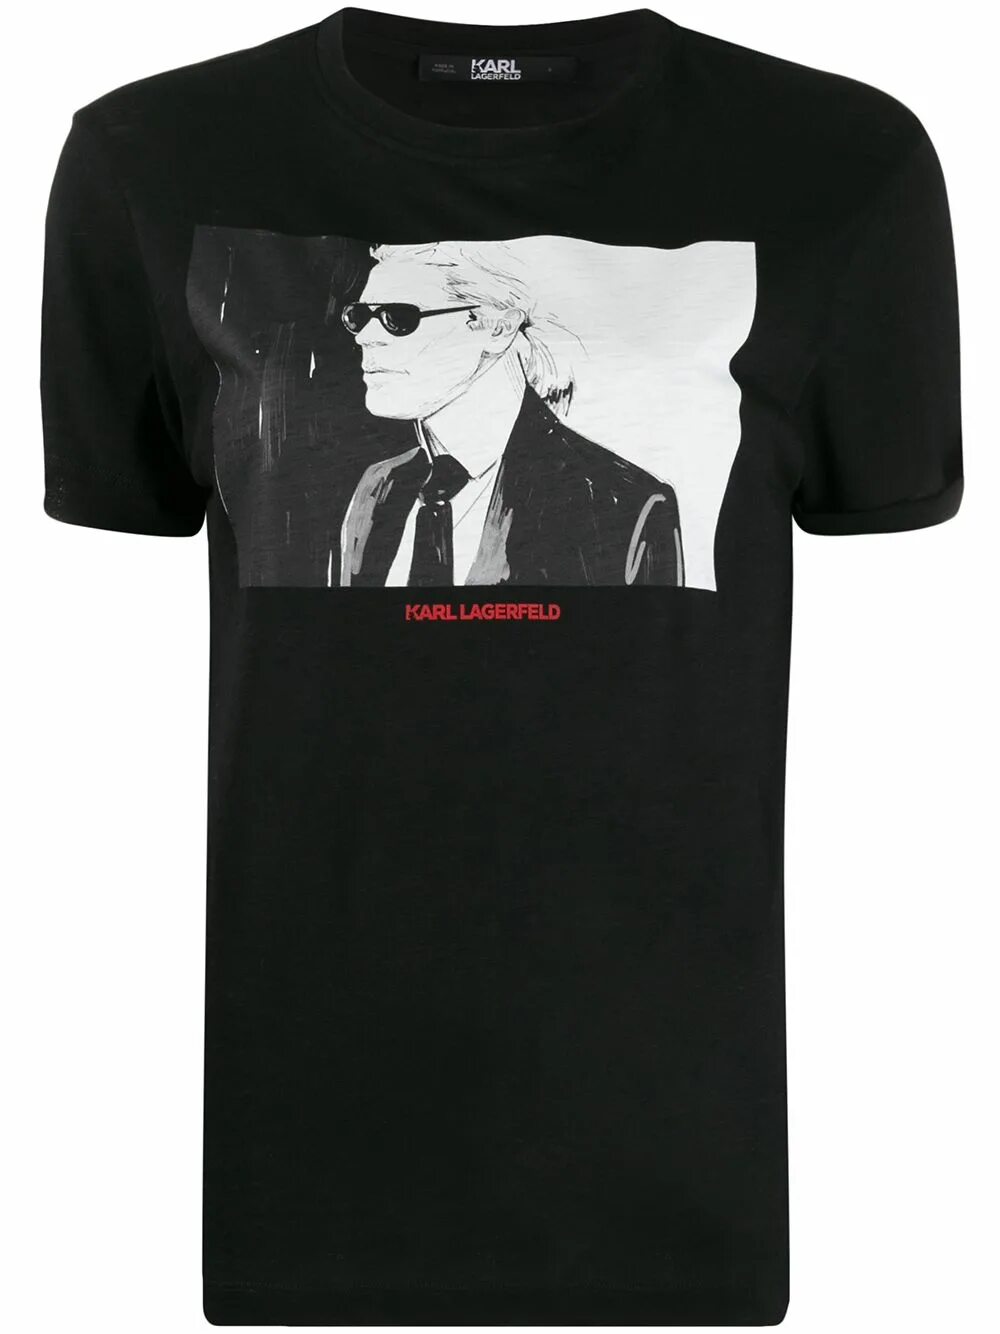 Karl Lagerfeld черная футболка Karl. Футболка Karl Lagerfeld 200w1740. Футболка Karl Lagerfeld мужская черная. Футболки лагерфельд купить